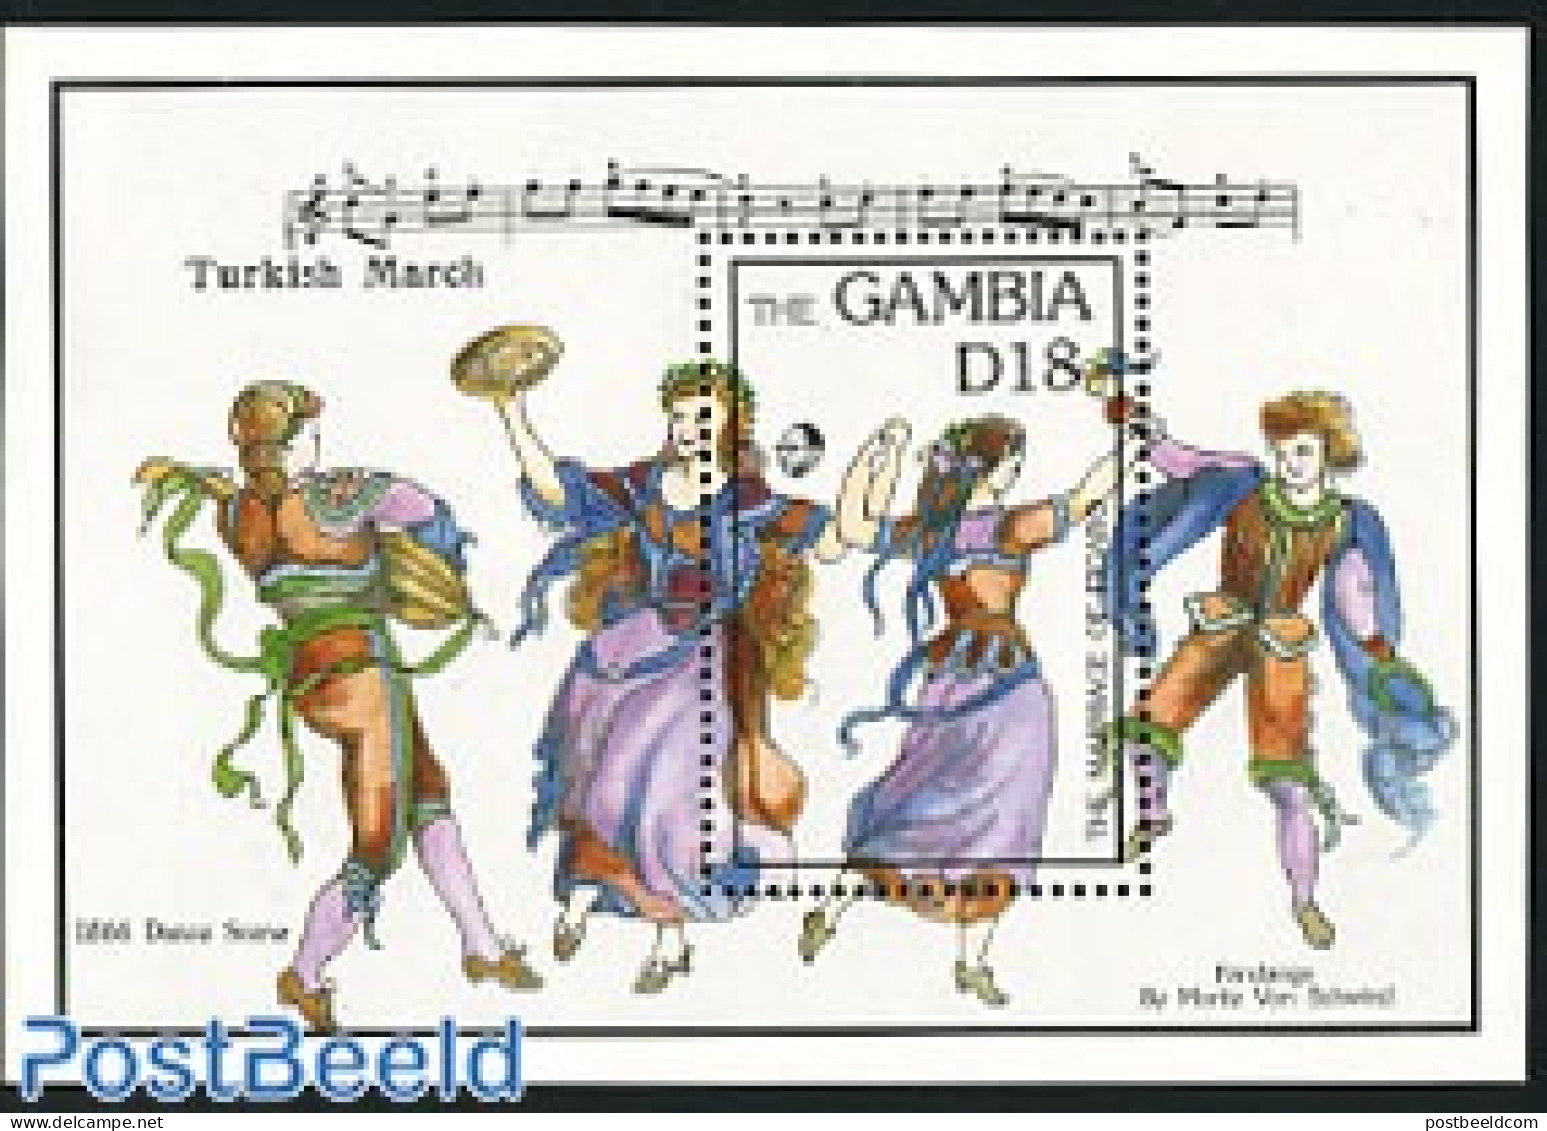 Gambia 1993 W.A. Mozart S/s, Mint NH, Performance Art - Amadeus Mozart - Music - Music